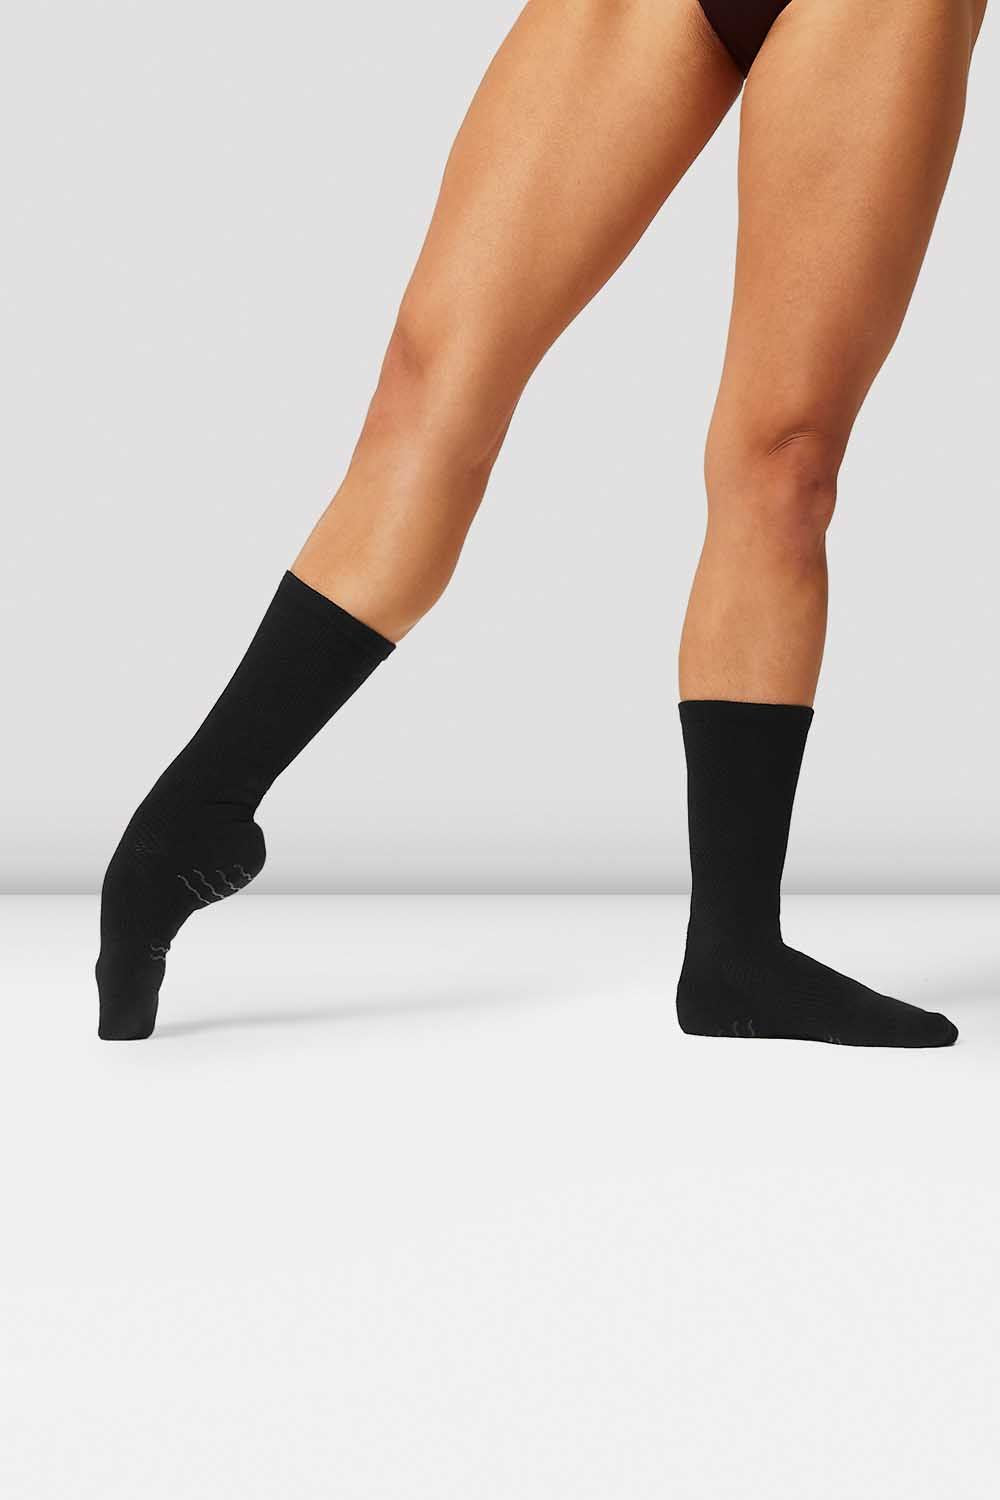 Long Socks for Dancers, Ballet Dance Footwear